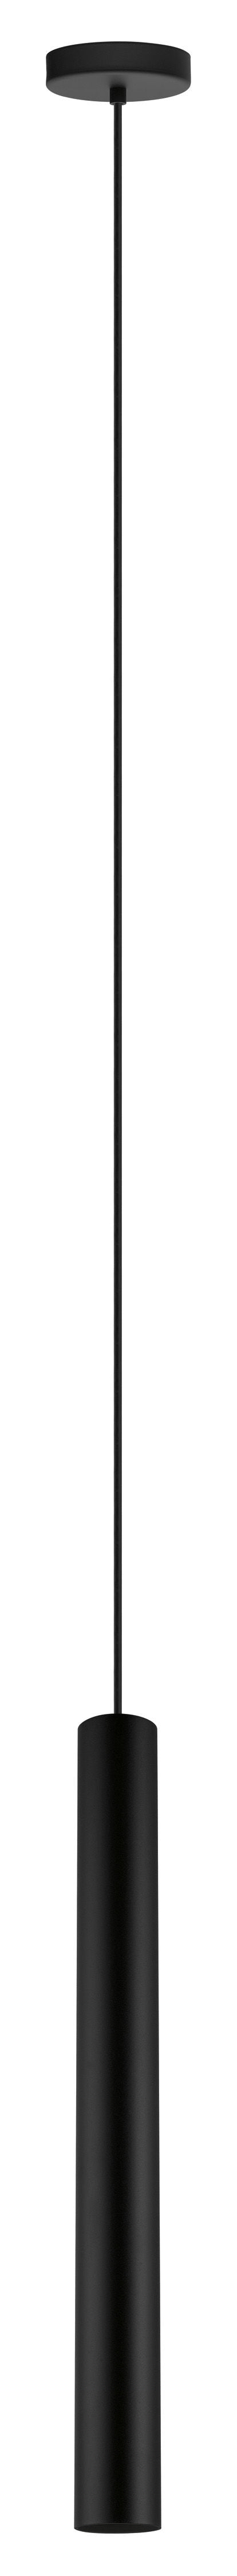 Tortoreto Suspension simple Noir - 62548A | EGLO